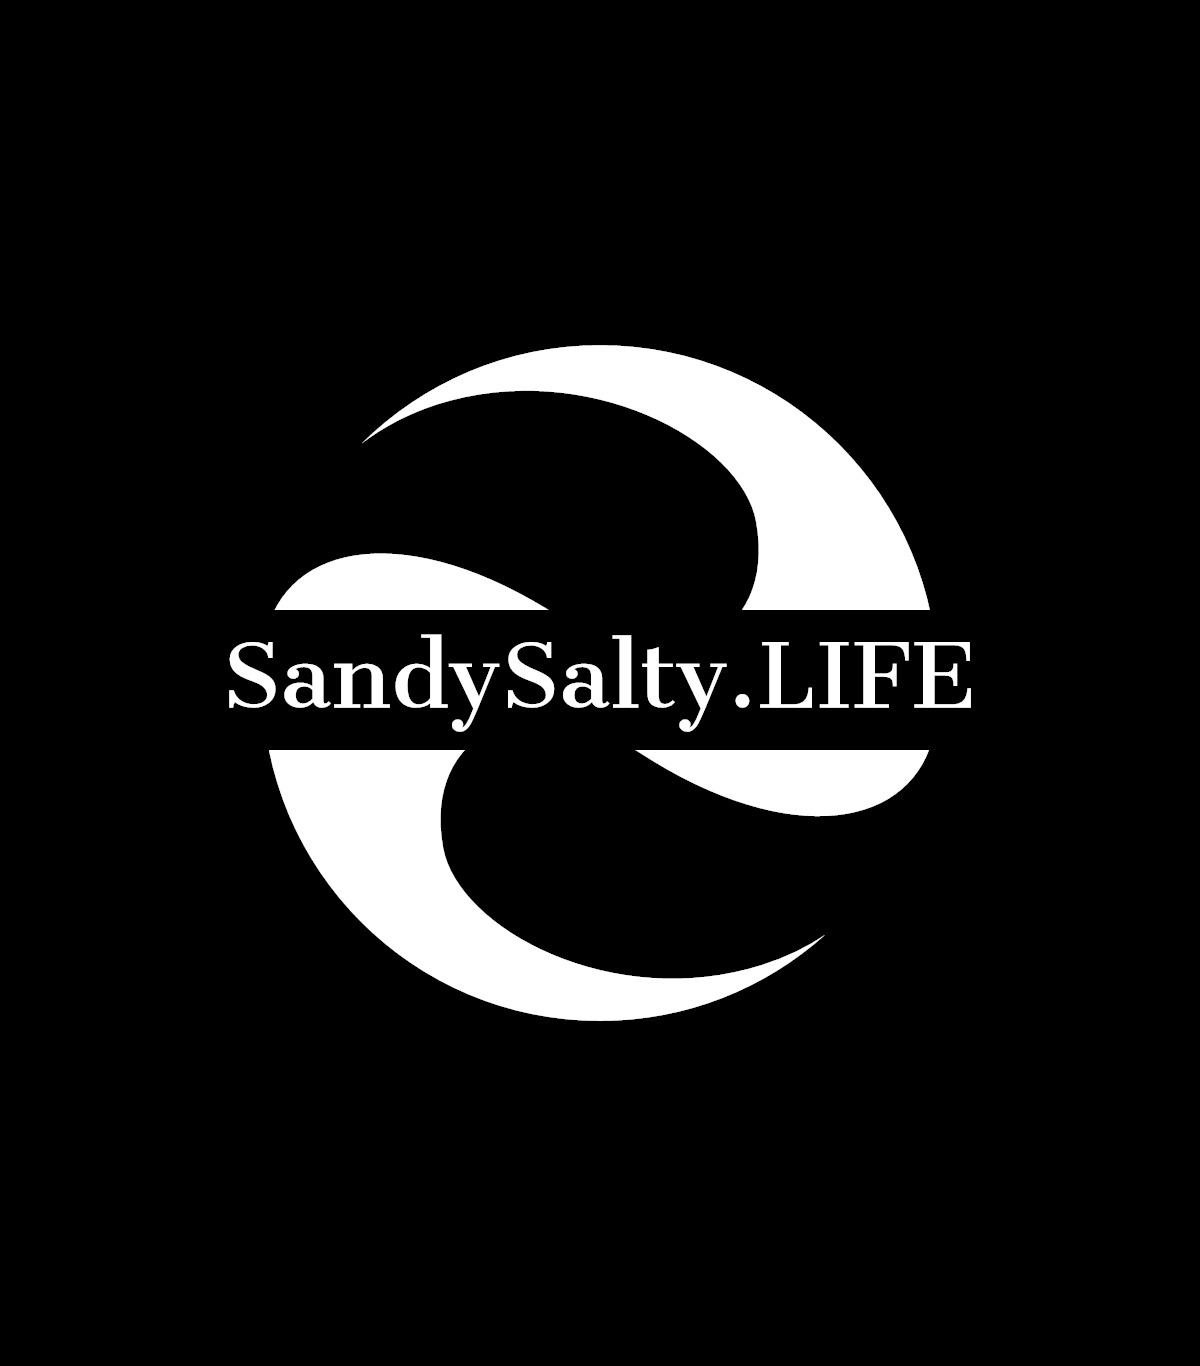 SandySalty.LIFE